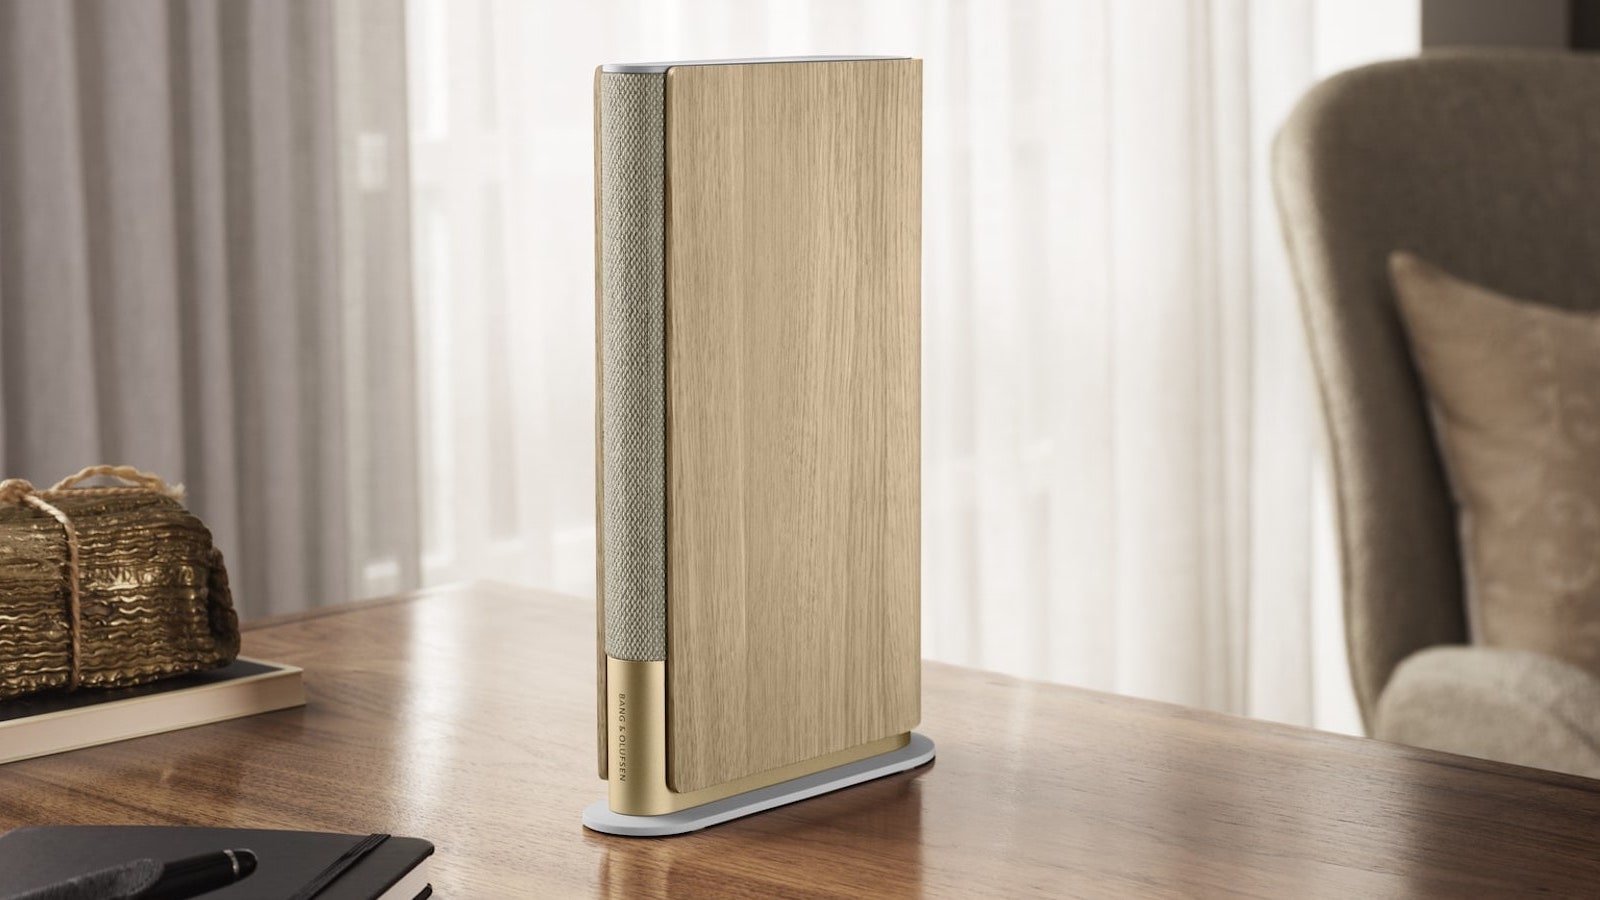 Bang & Olufsen Beosound Emerge Wi-Fi home speaker packs ultrawide sound in a slim design